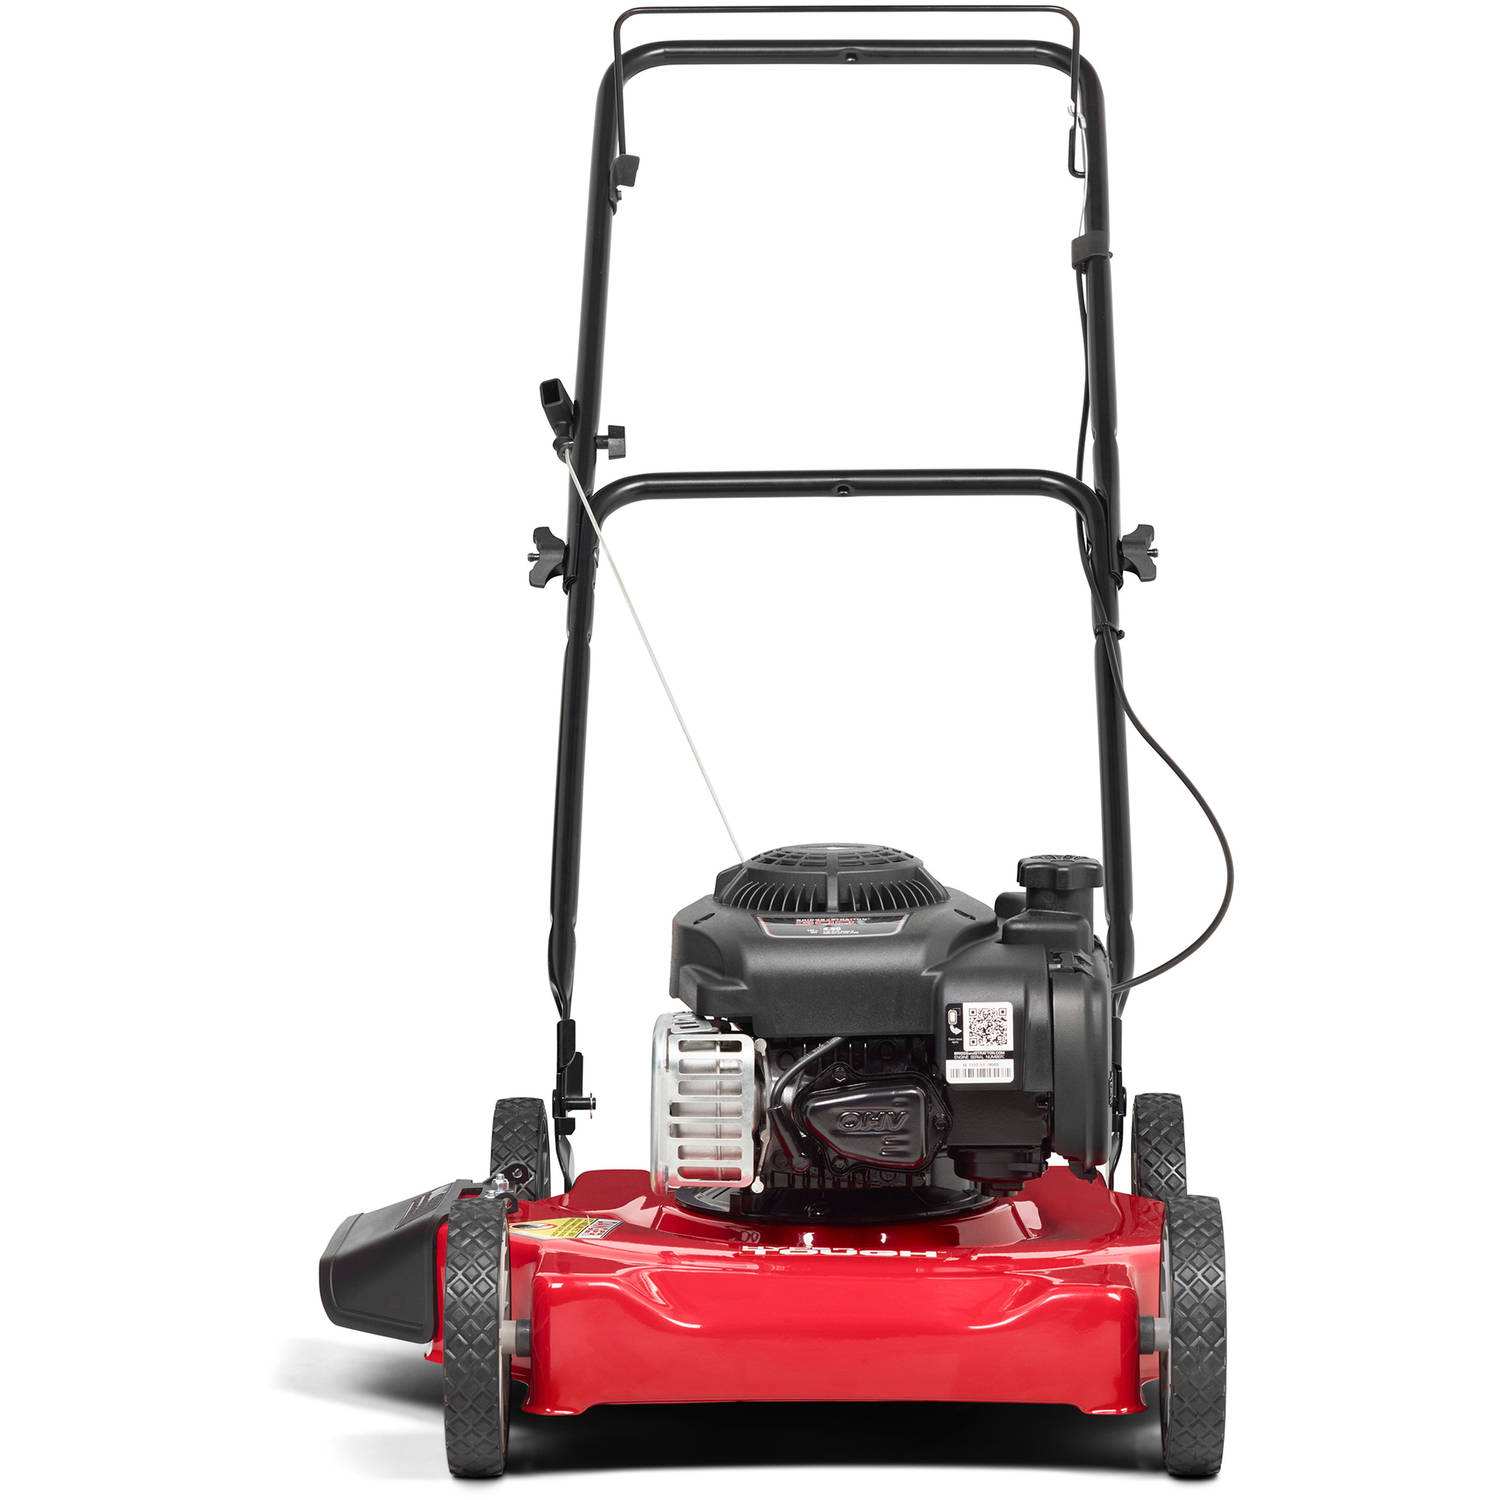 Hyper Tough 20" Gas-Powered Side Discharge Lawn Mower | eBay